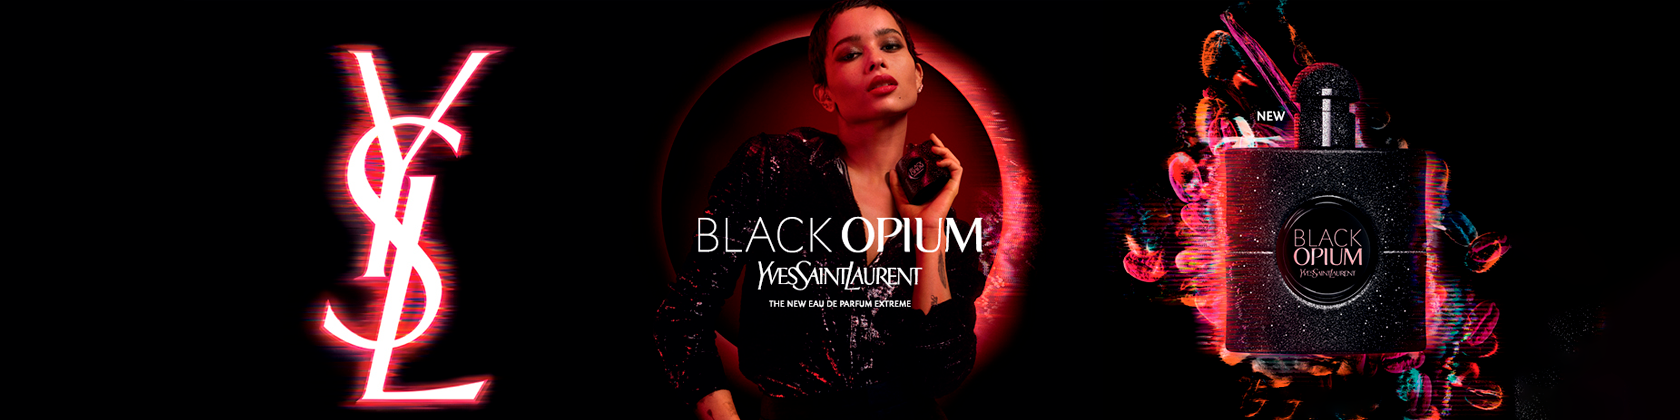 Banner YSL black opium